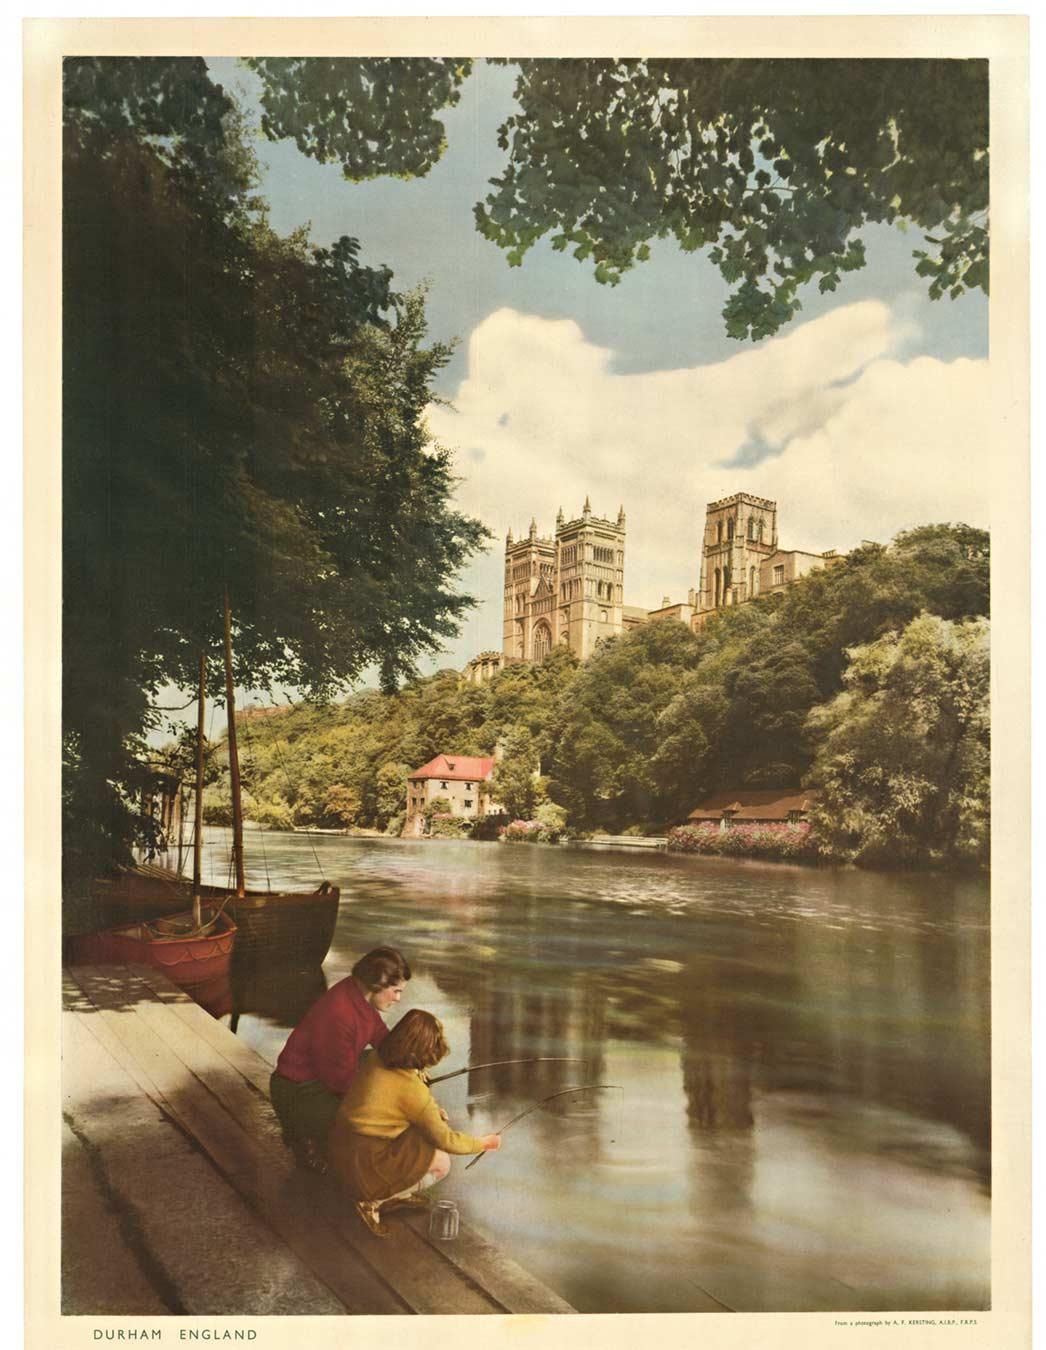 Affiche de voyage vintage originale de Durham, Angleterre, British Railways - Print de Anthony Frank Kersting